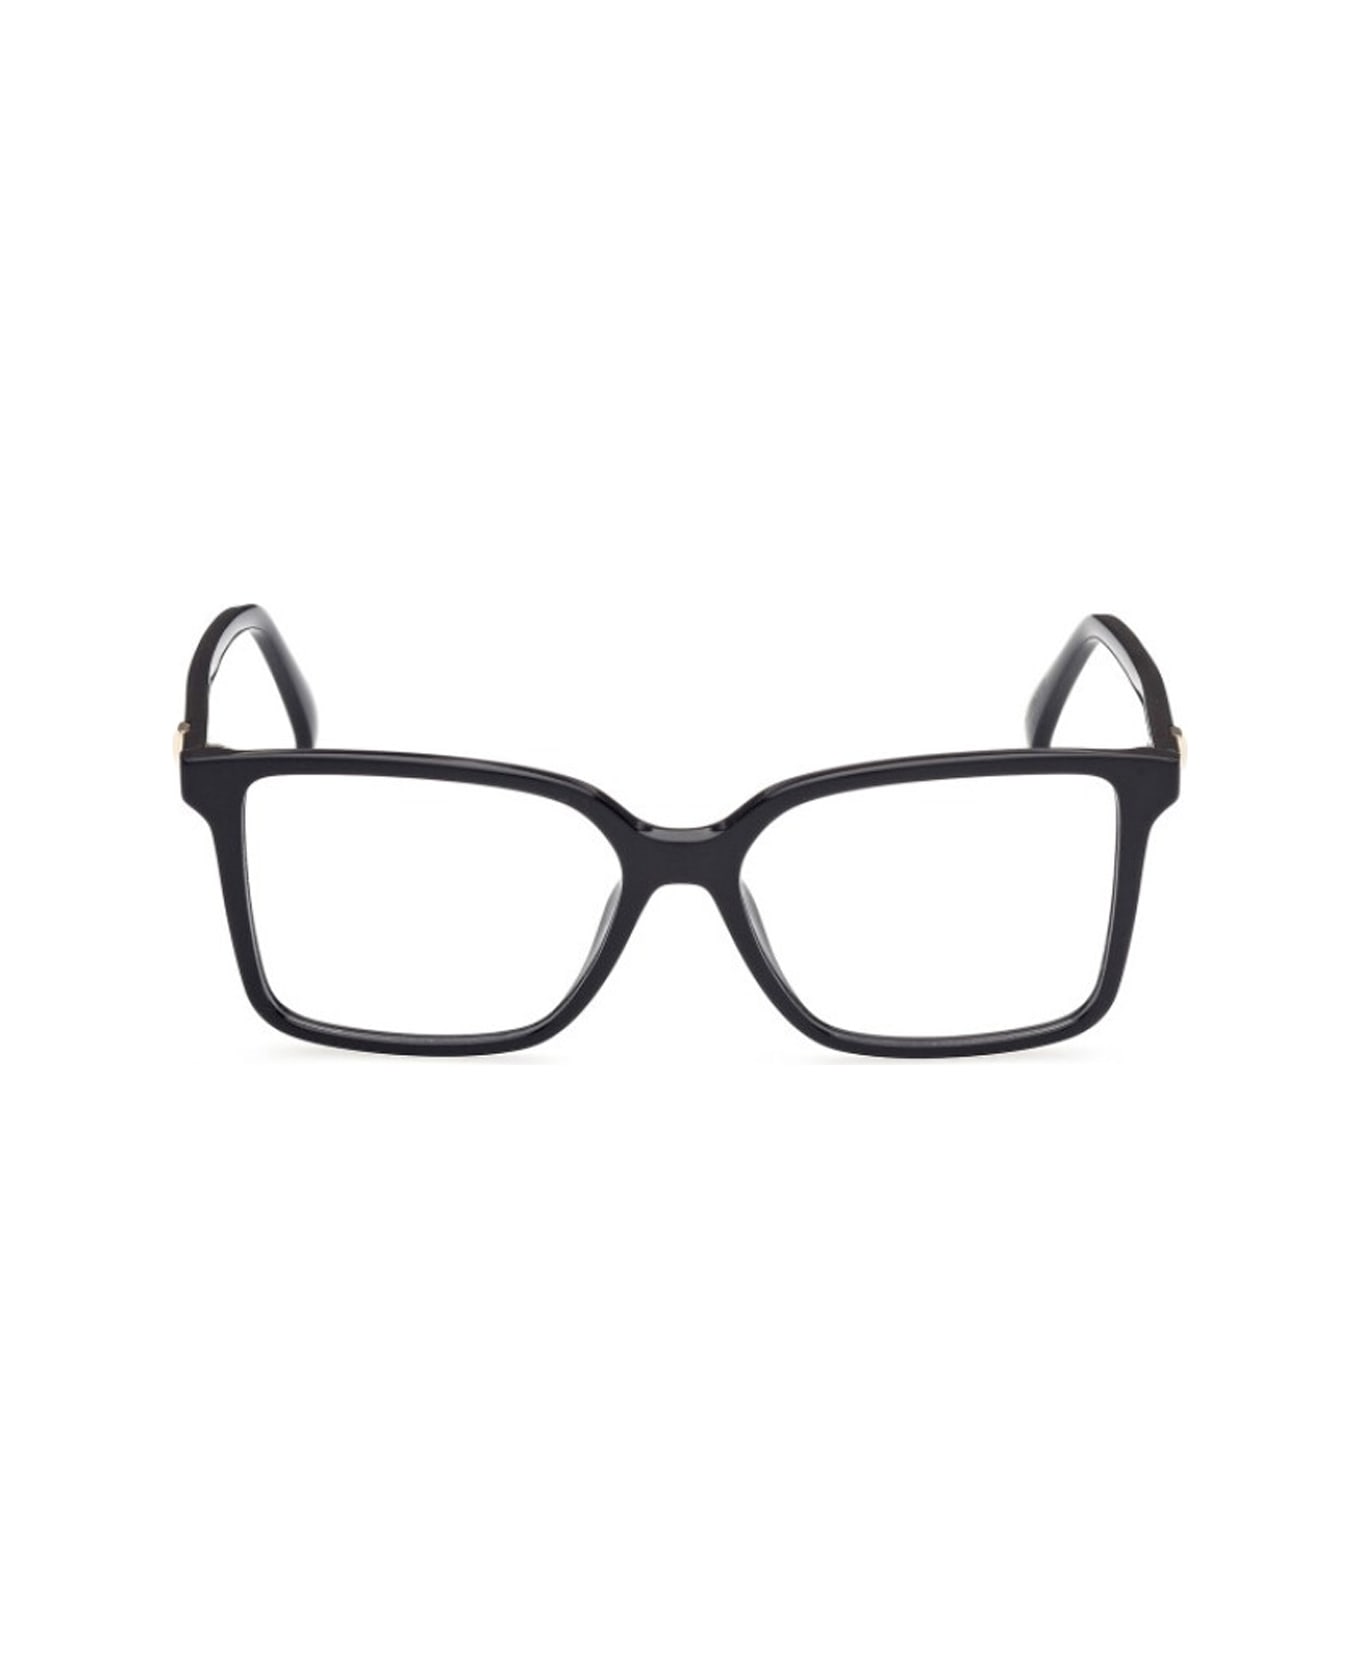 Max Mara Mm5022 Glasses - Nero アイウェア